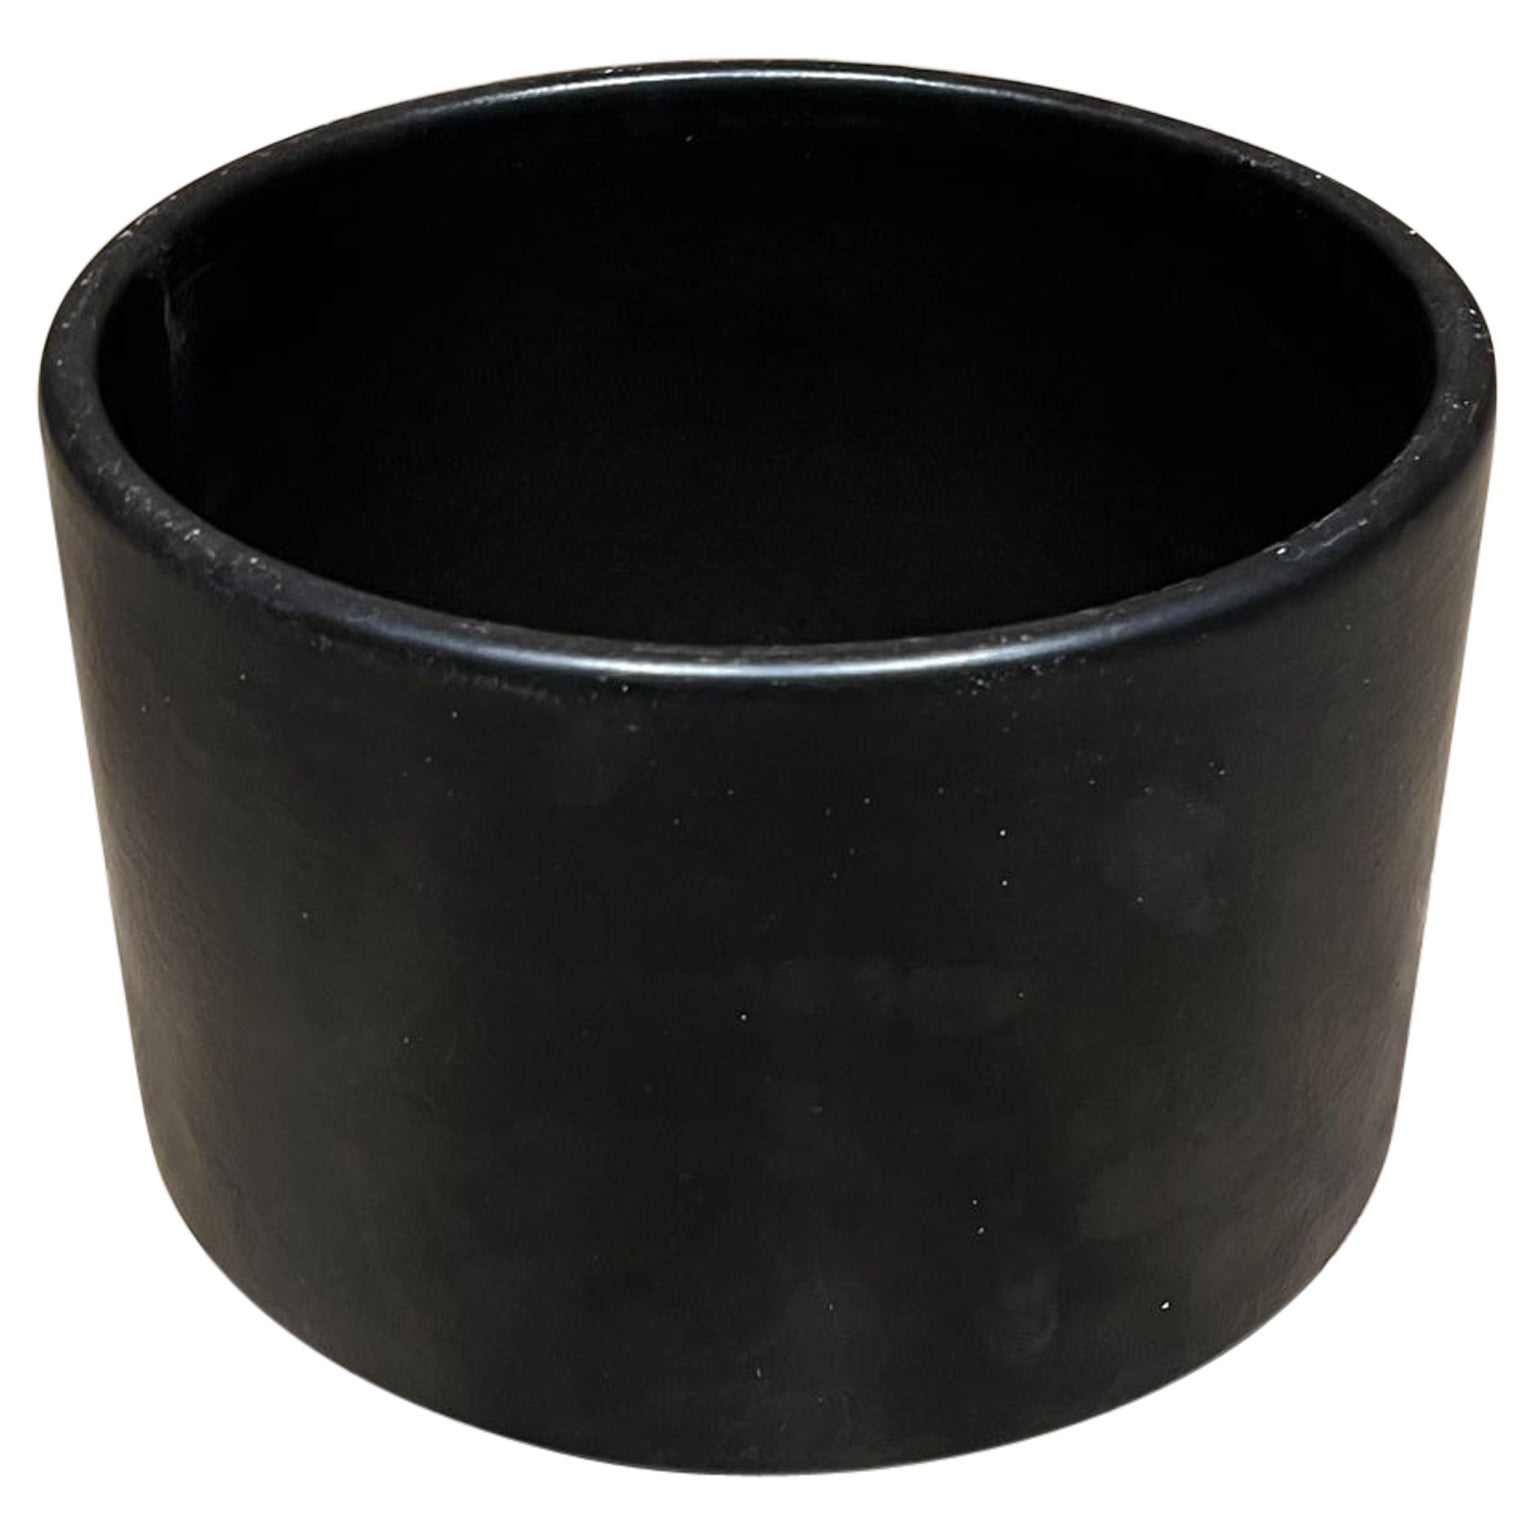 1960s Modern Planter Pot Small Black La Verne, Calif Architectural Pottery For Sale